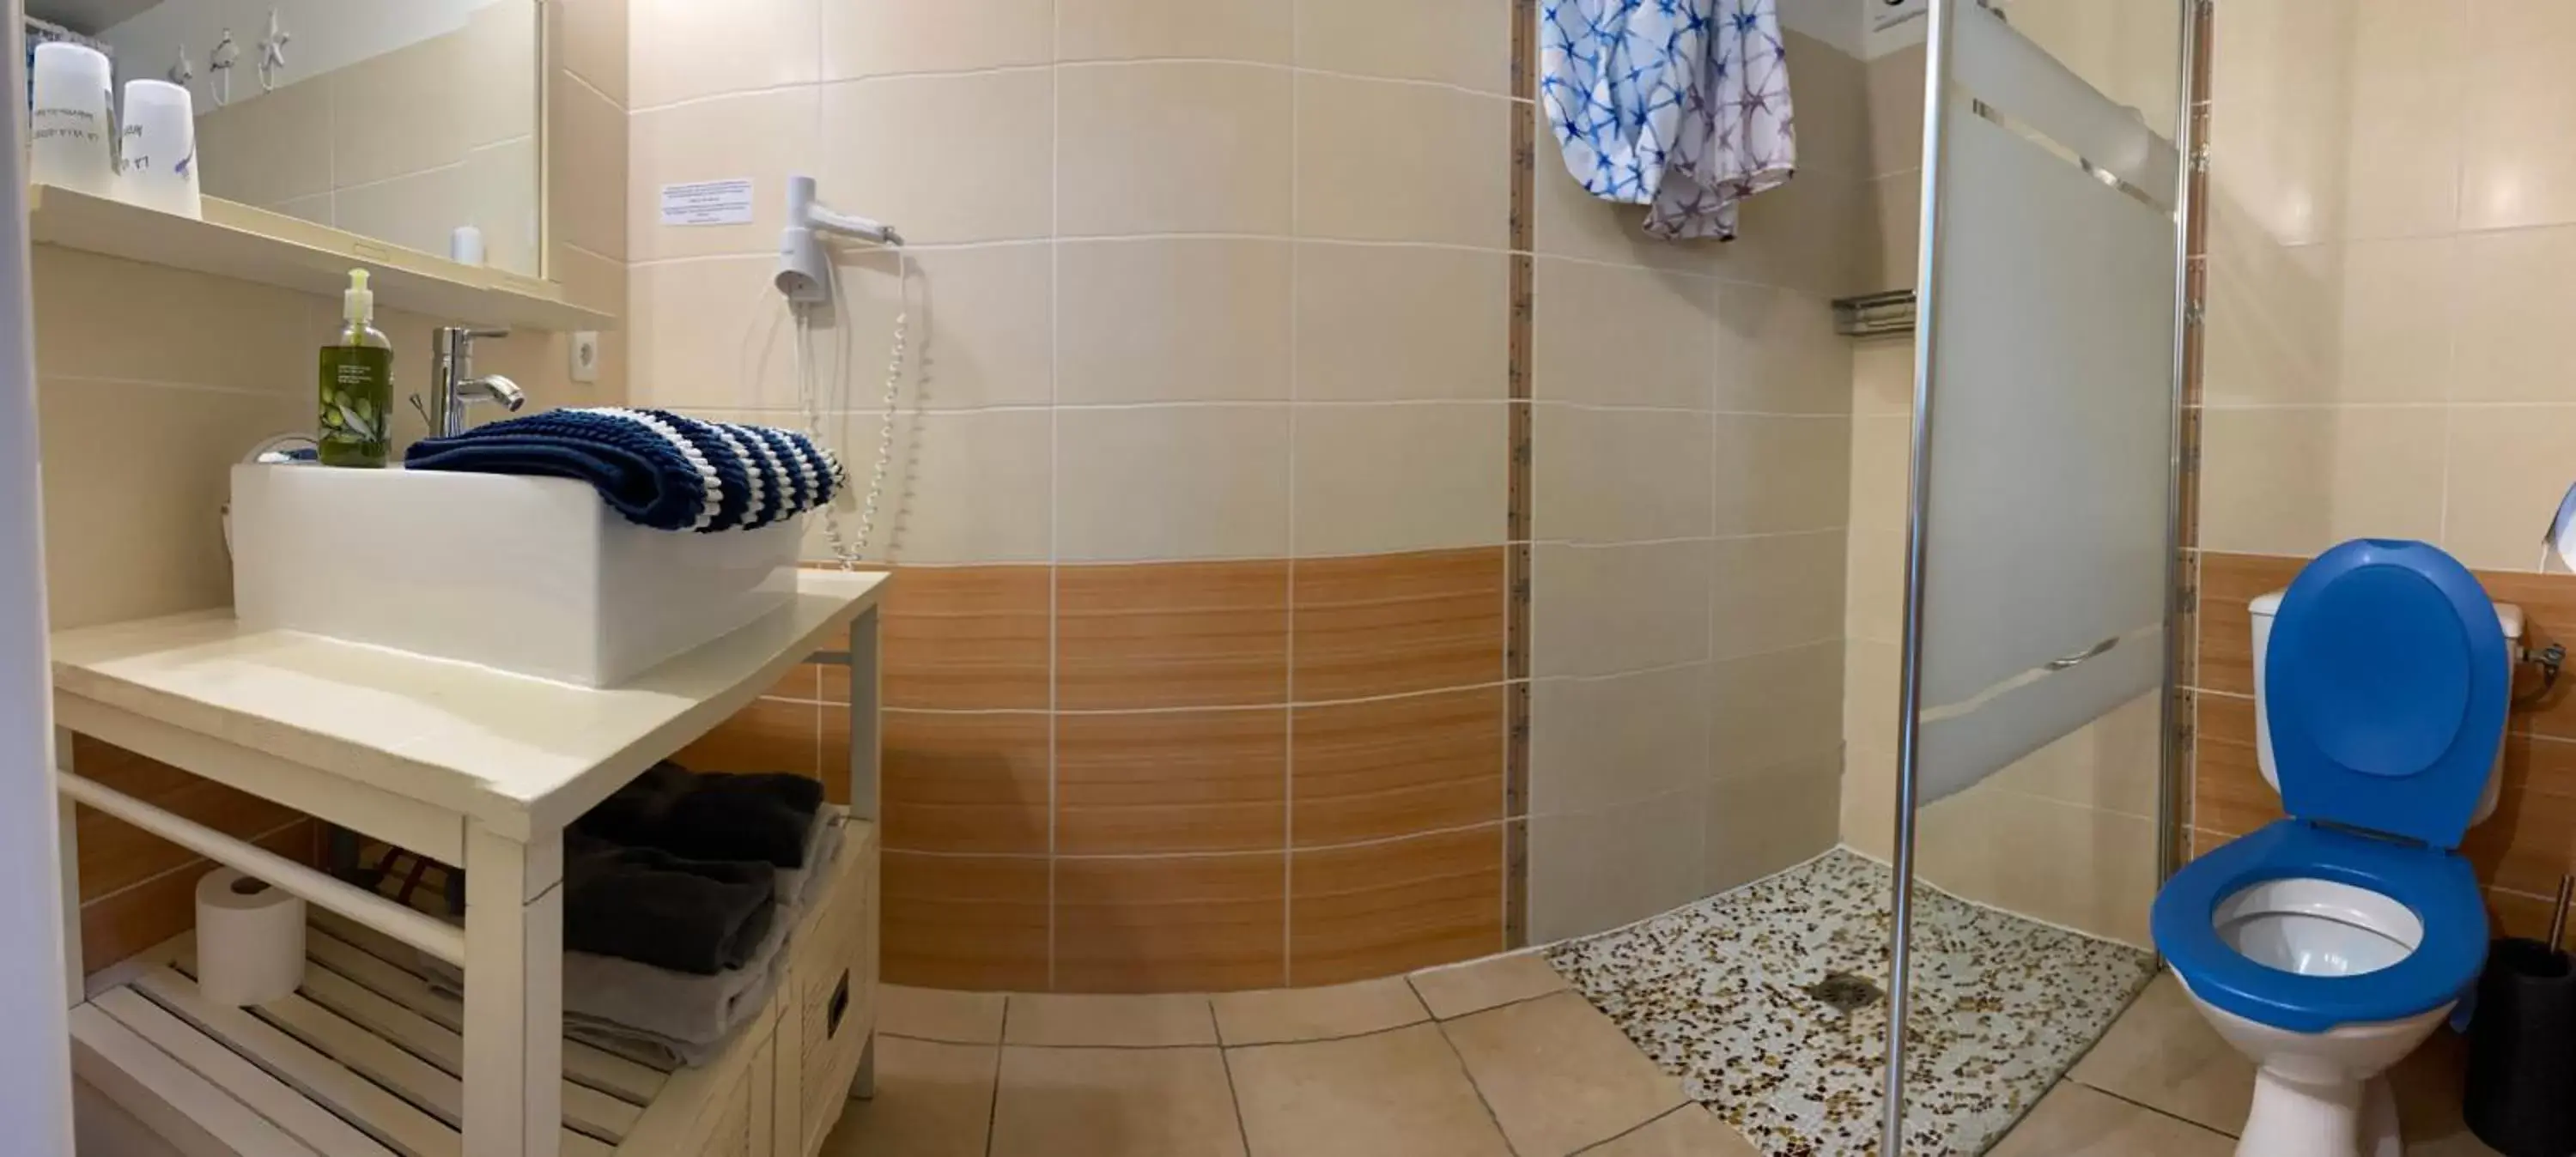 Bathroom in VILLA HERBERT Chambres d'hôtes Gîte Soirée étape